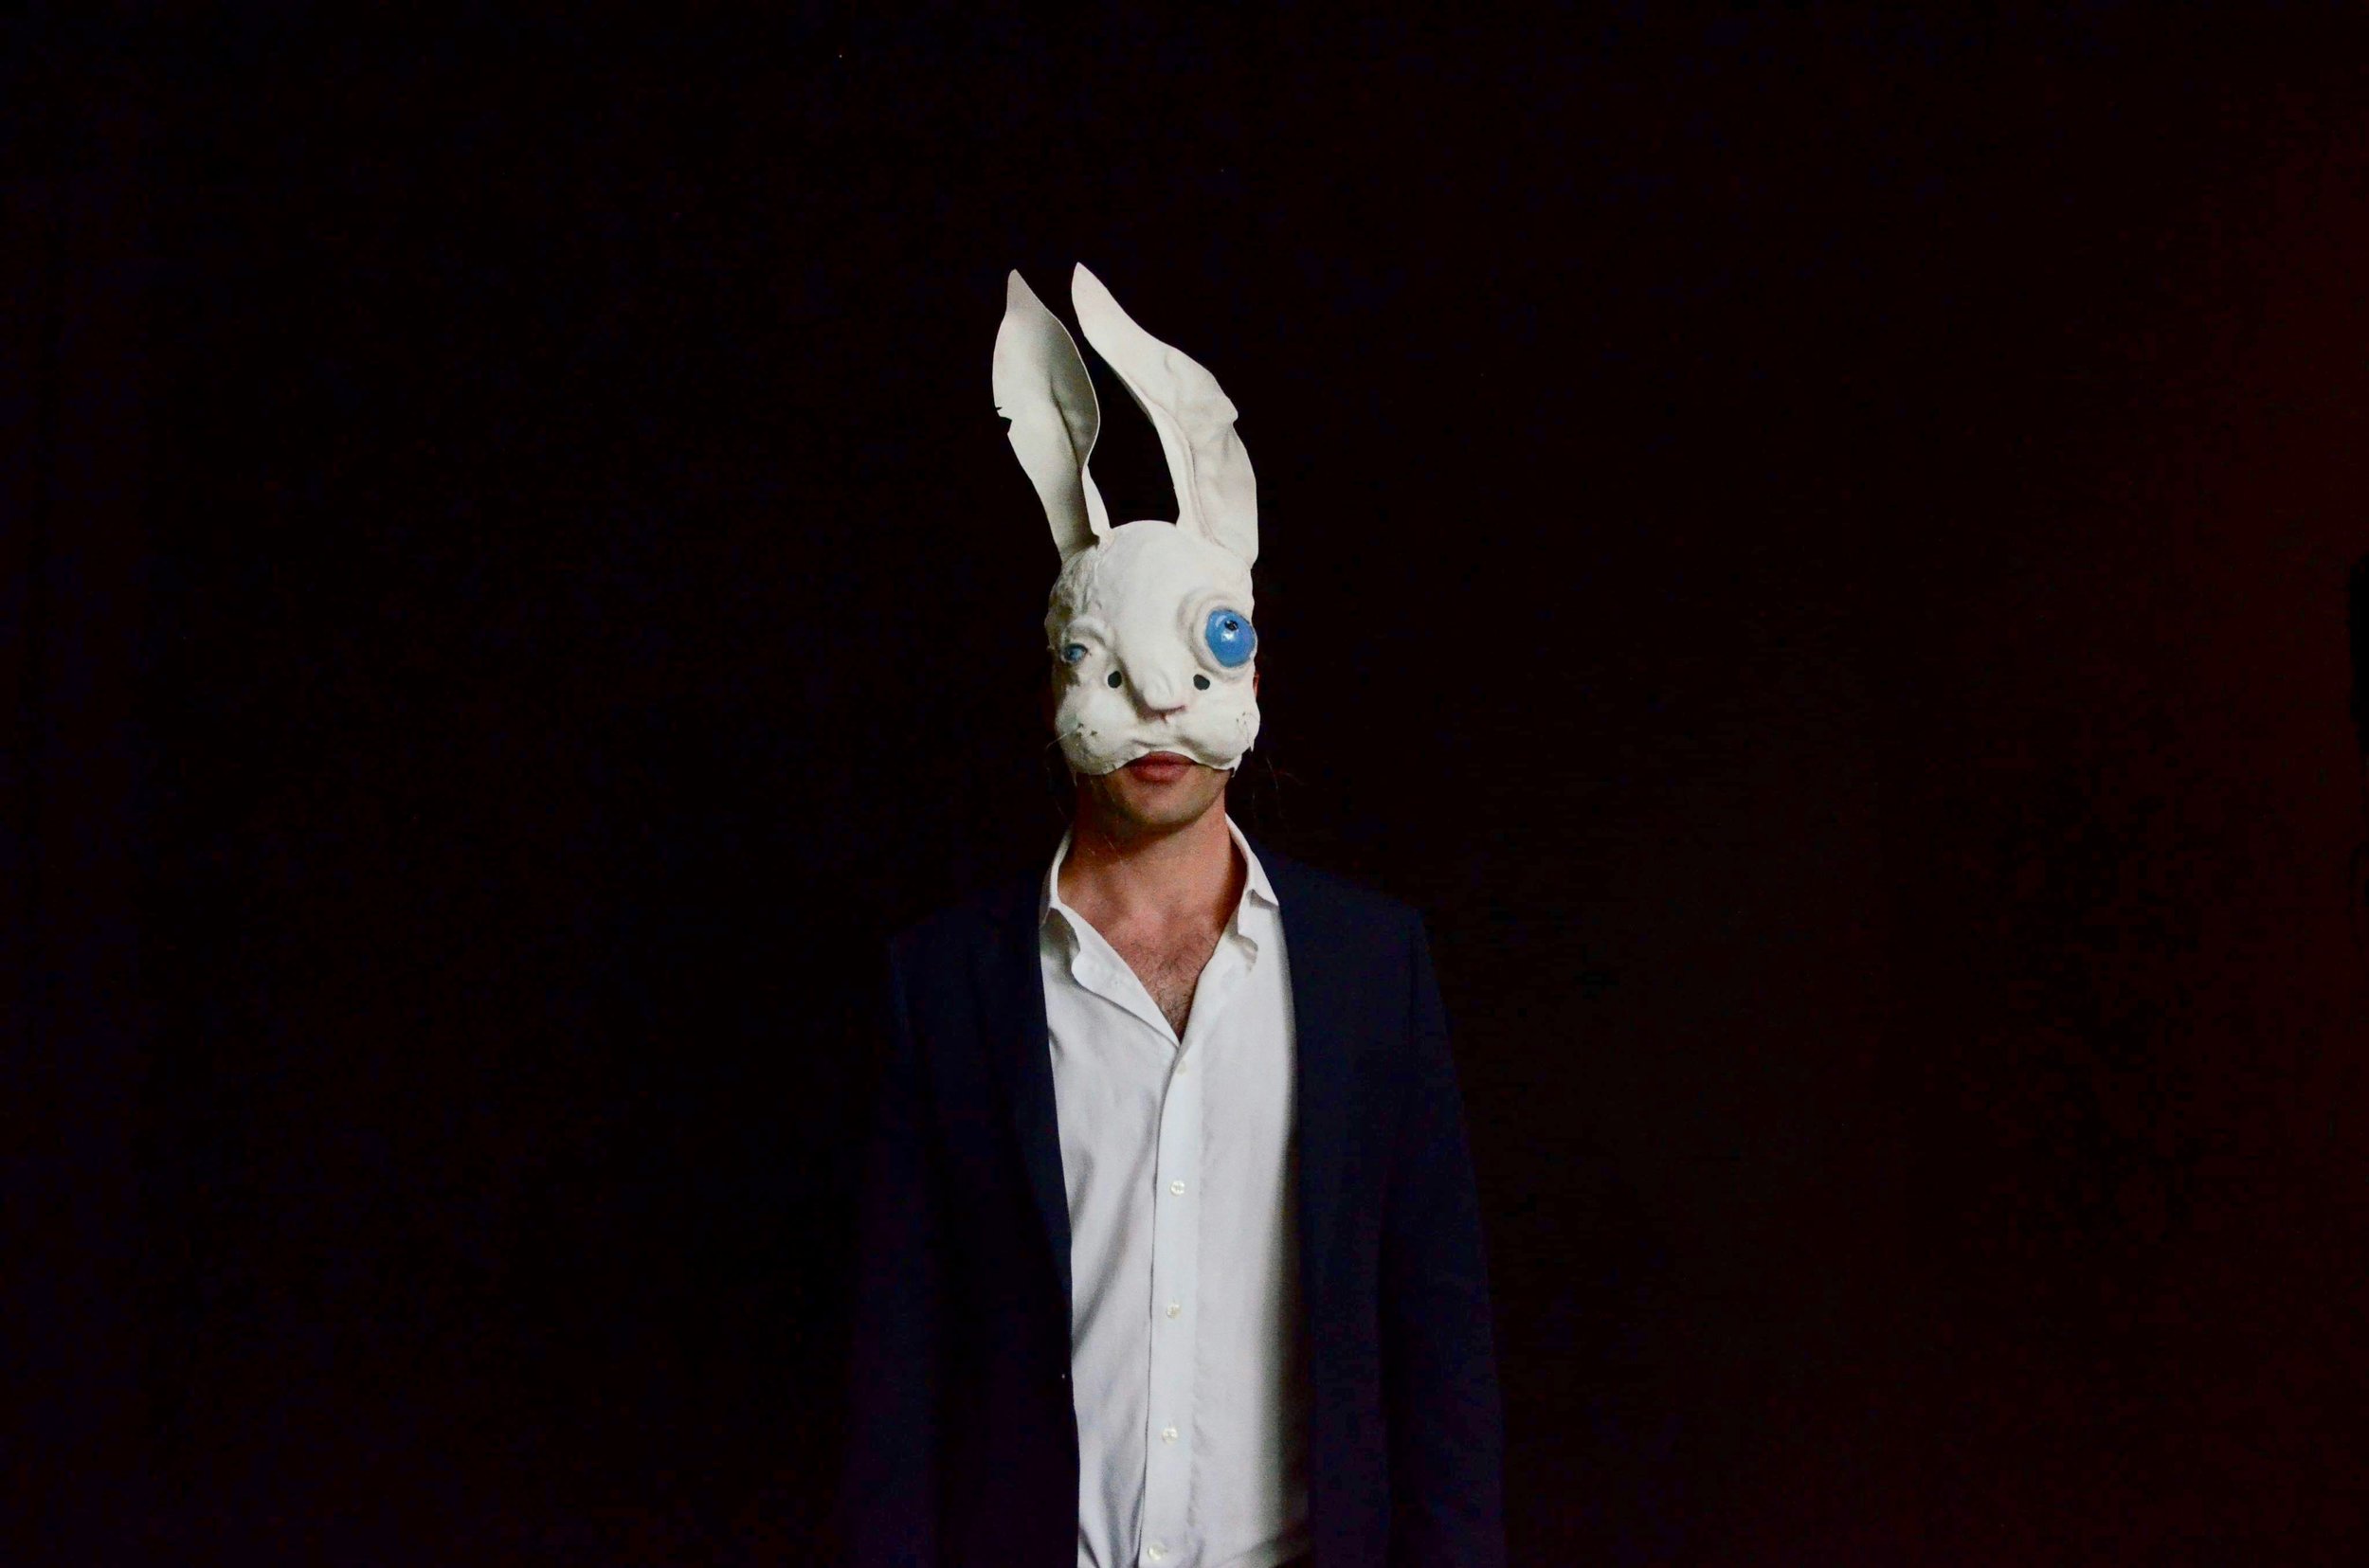 'The Rabbits', 2018